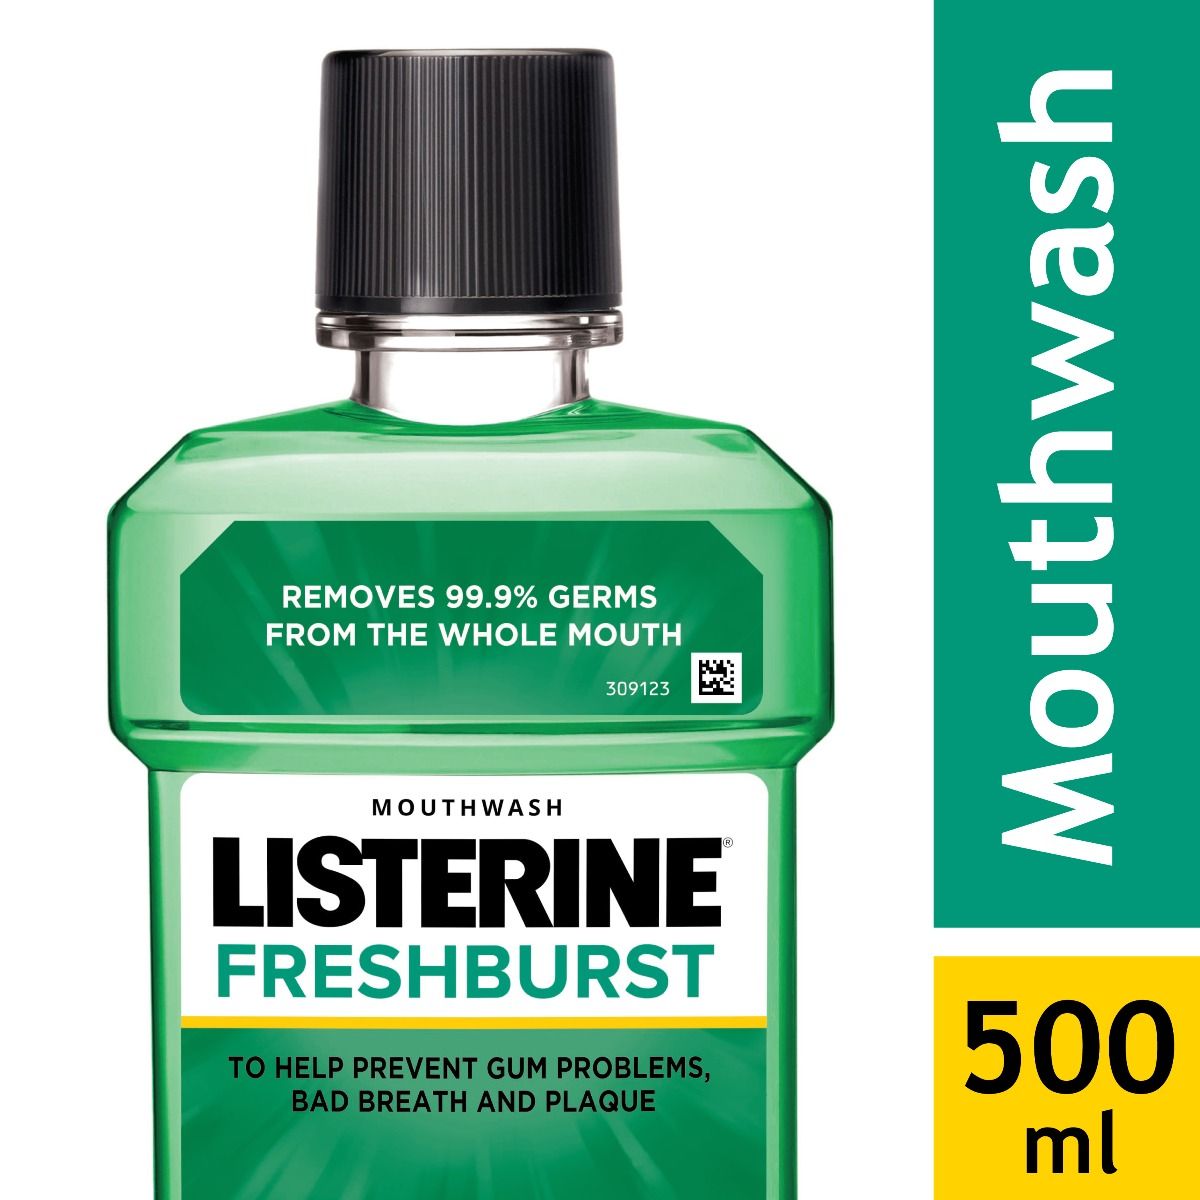 Listerine Freshburst Mouthwash, 500 ml, Pack of 1 